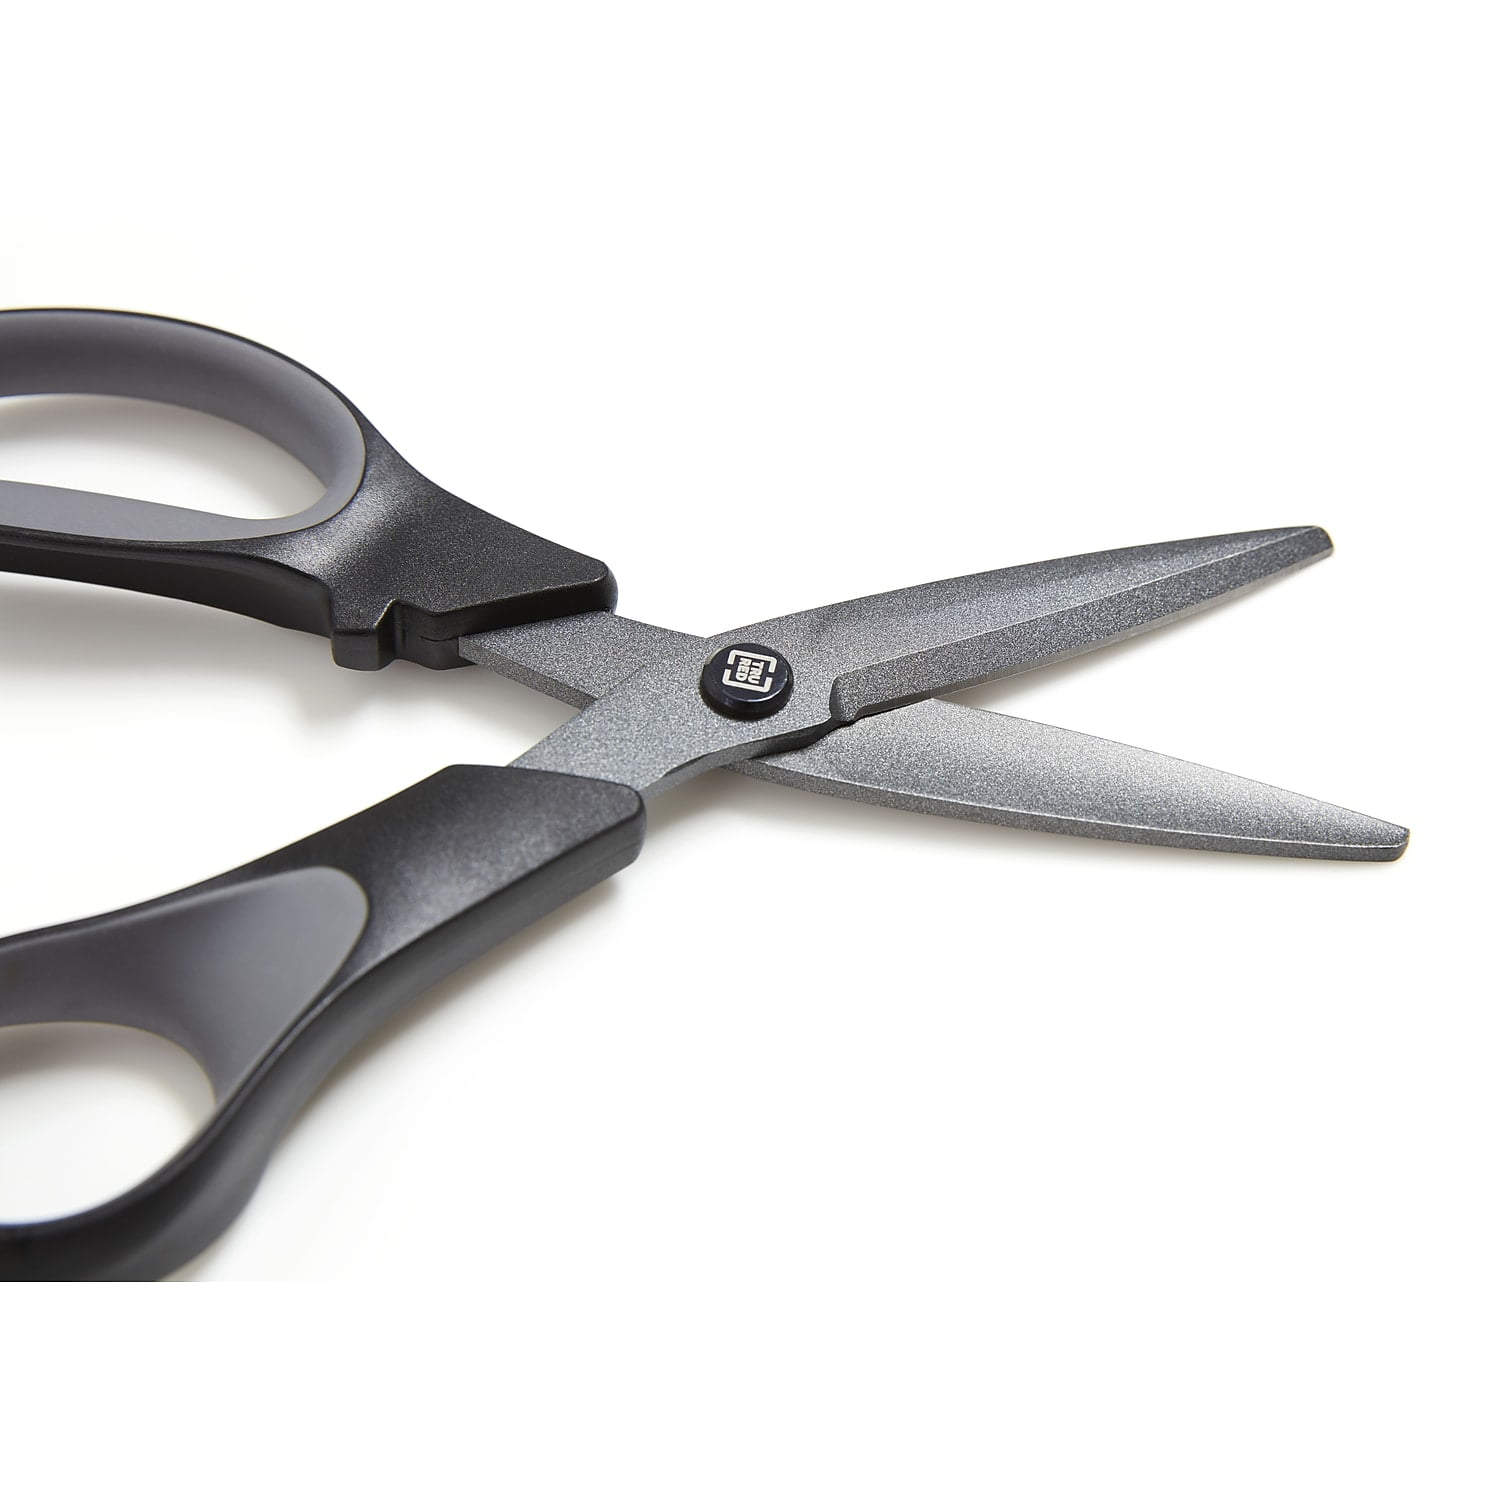 Bazic 7 Stainless Steel Scissors